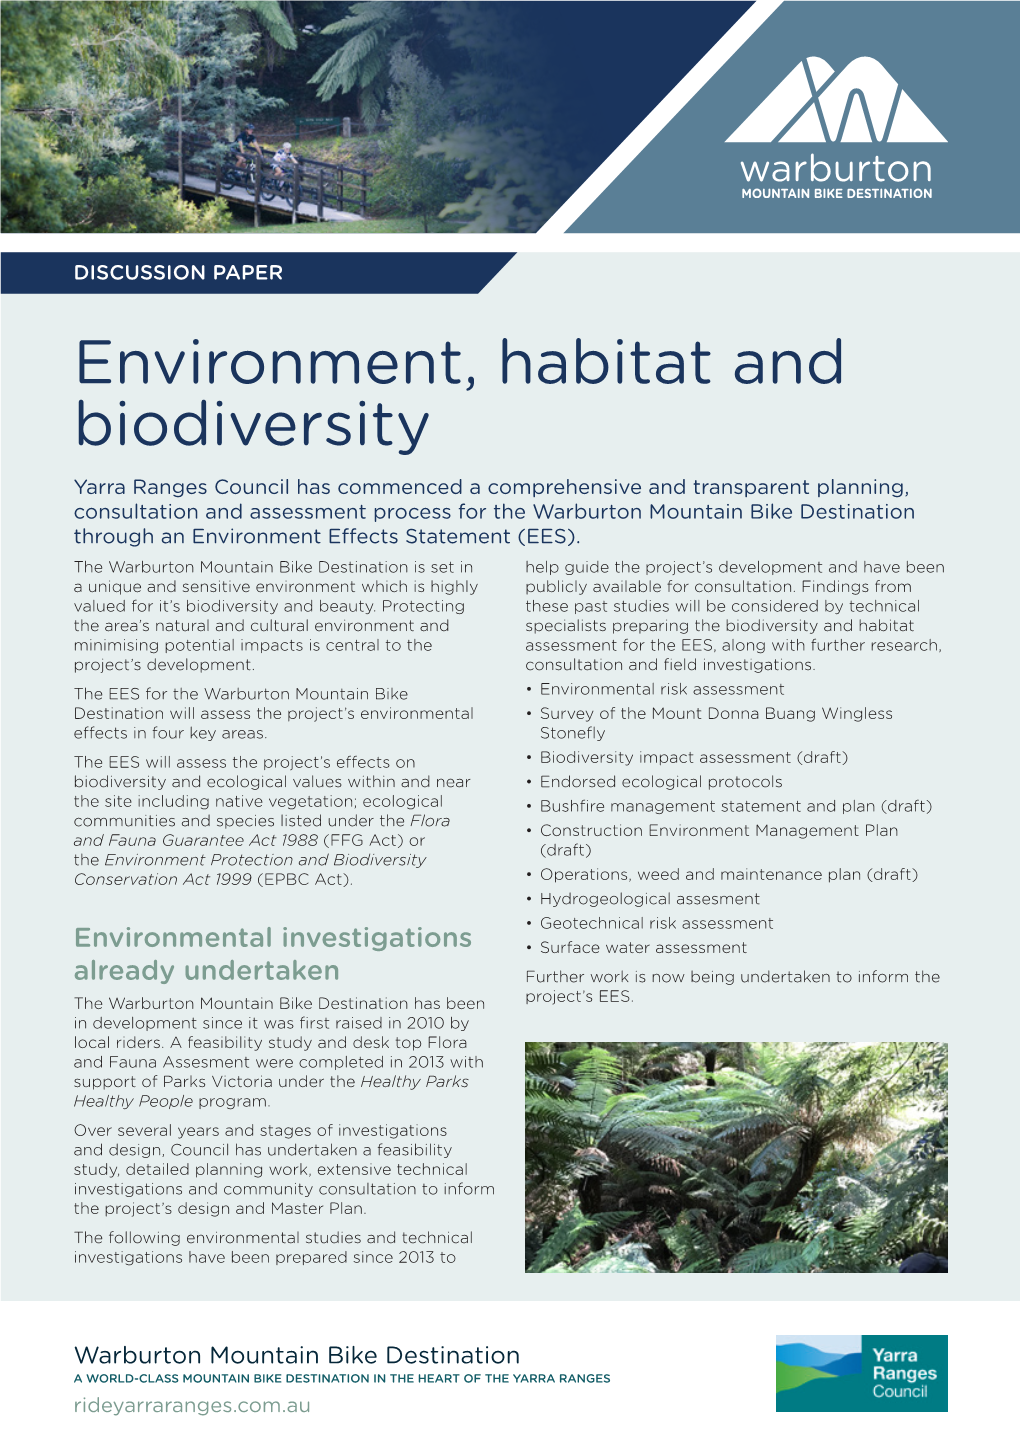 Environment, Habitat and Biodiversity